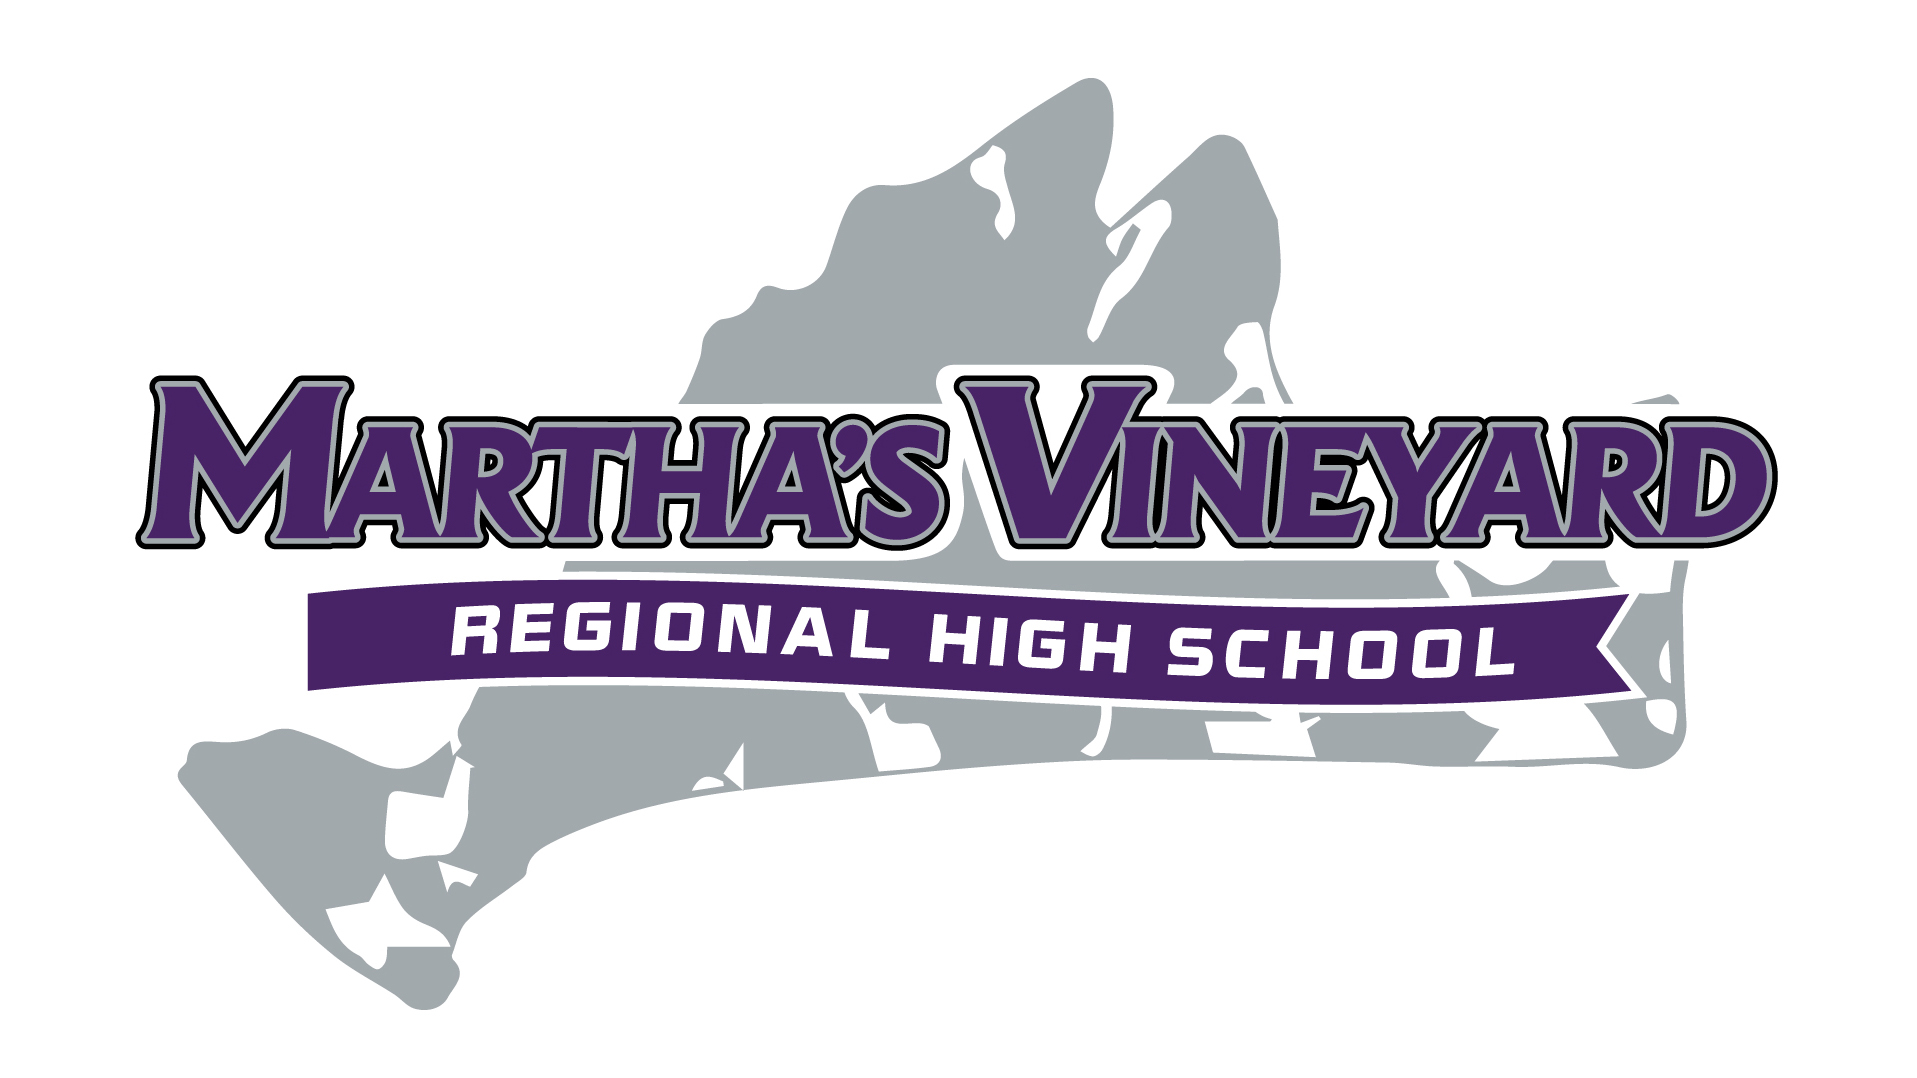 Martha's Vineyard Regional High School Scholarship Program logo